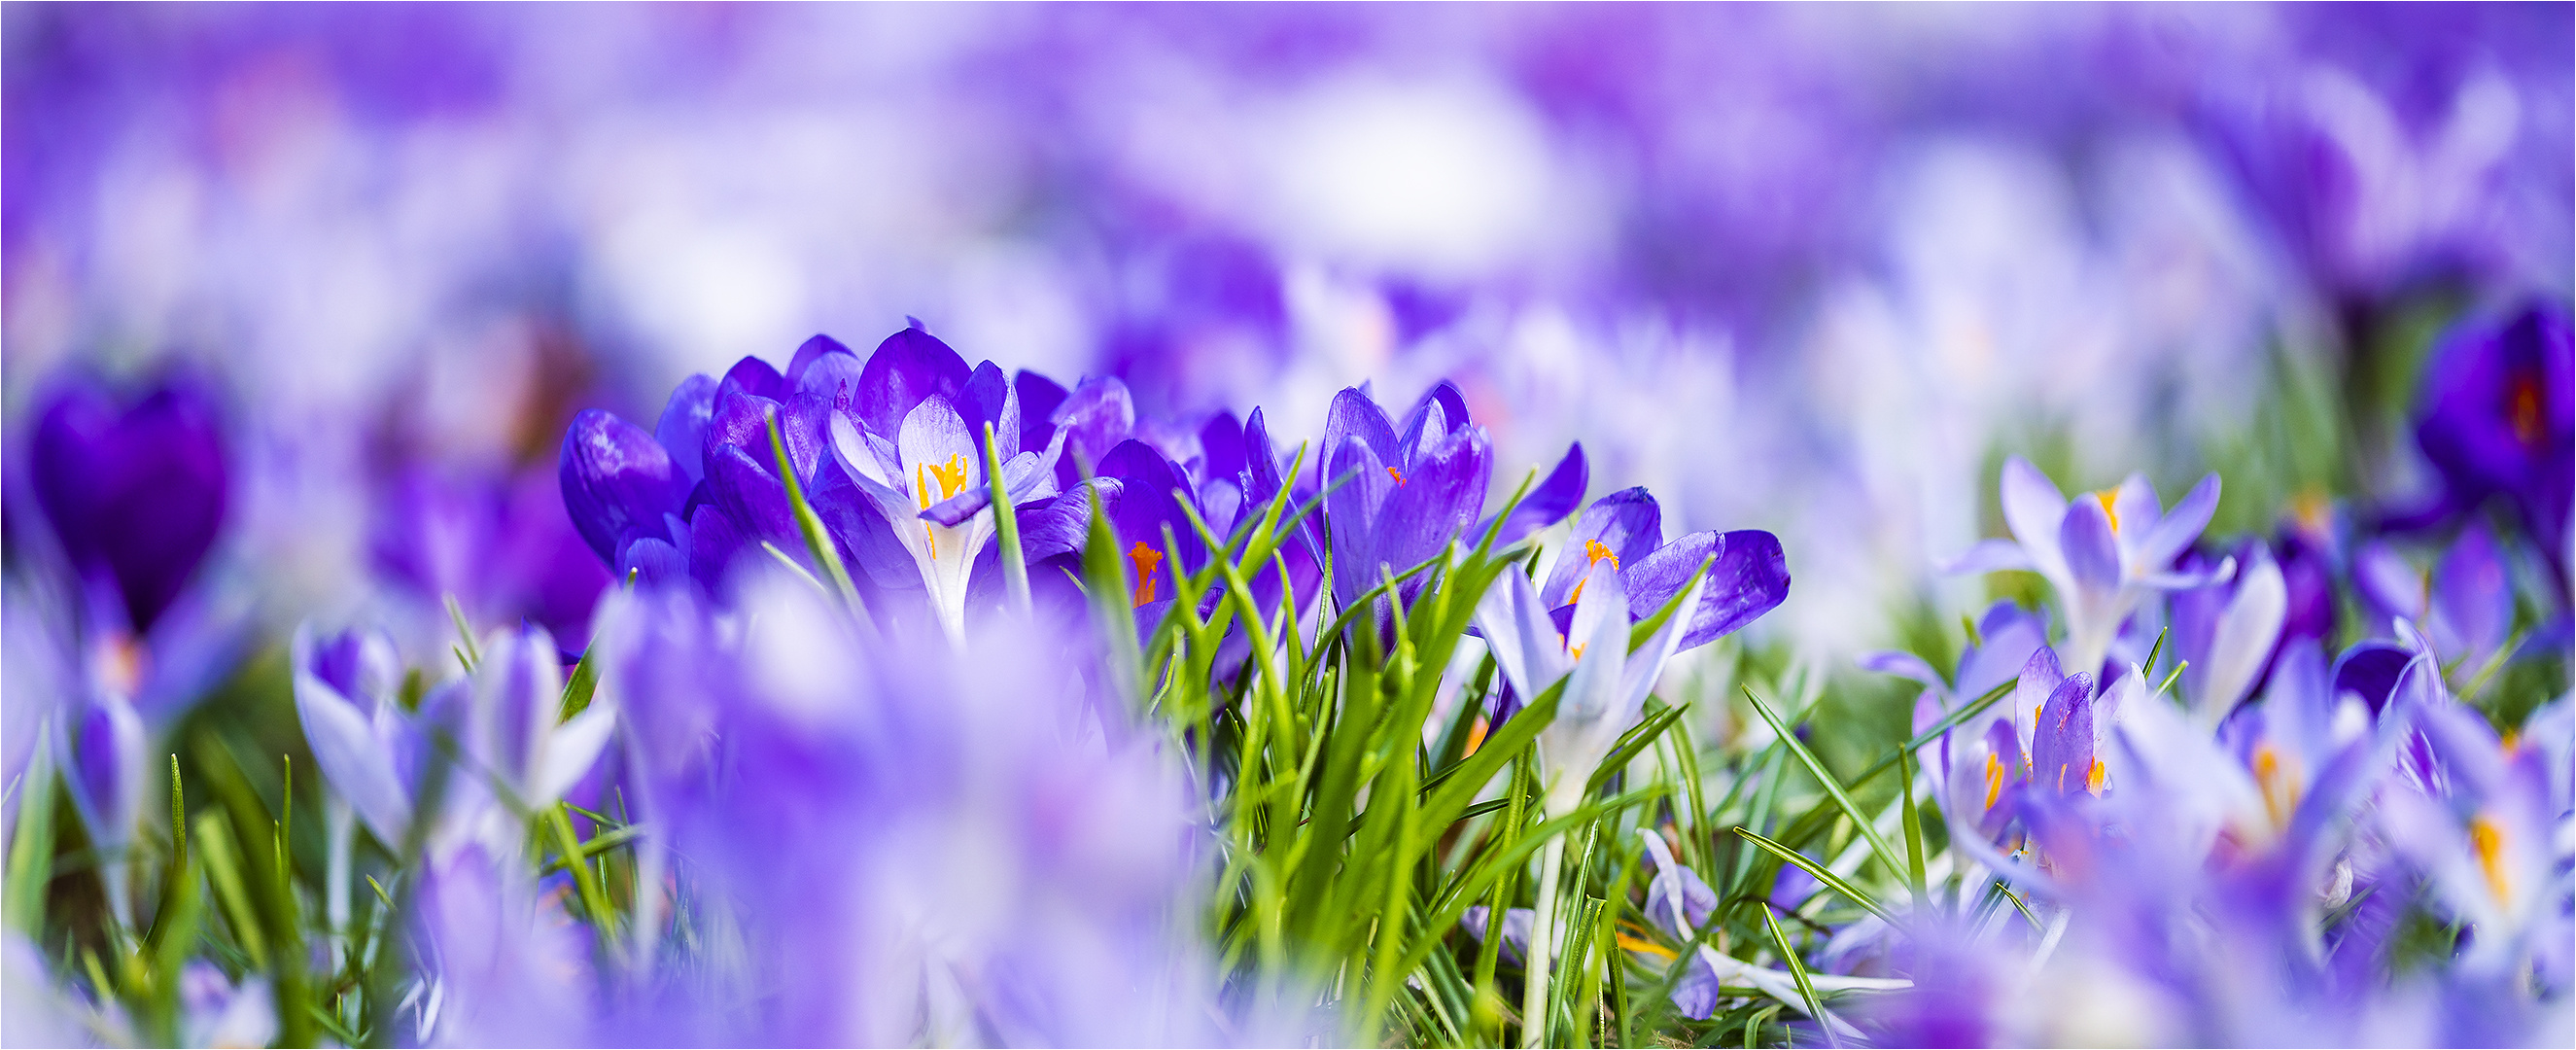 … Frühling lässt sein blaues Band …